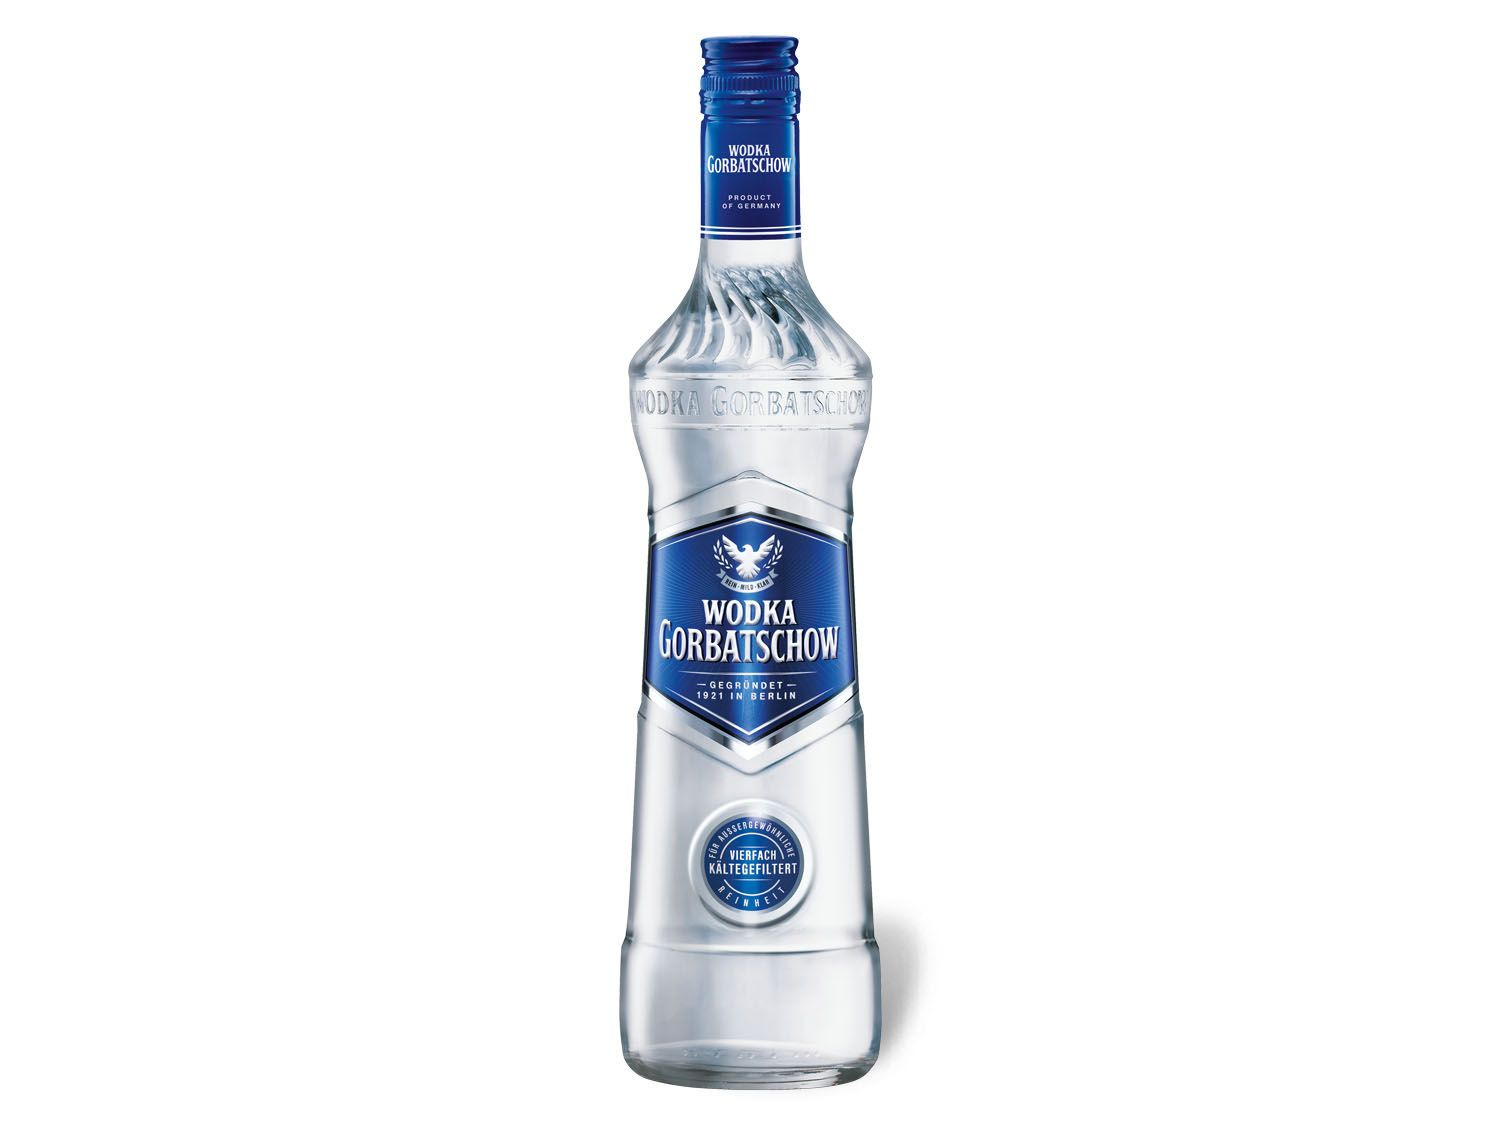 Wodka Gorbatschow vegan 37,5% Vol online kaufen | LIDL